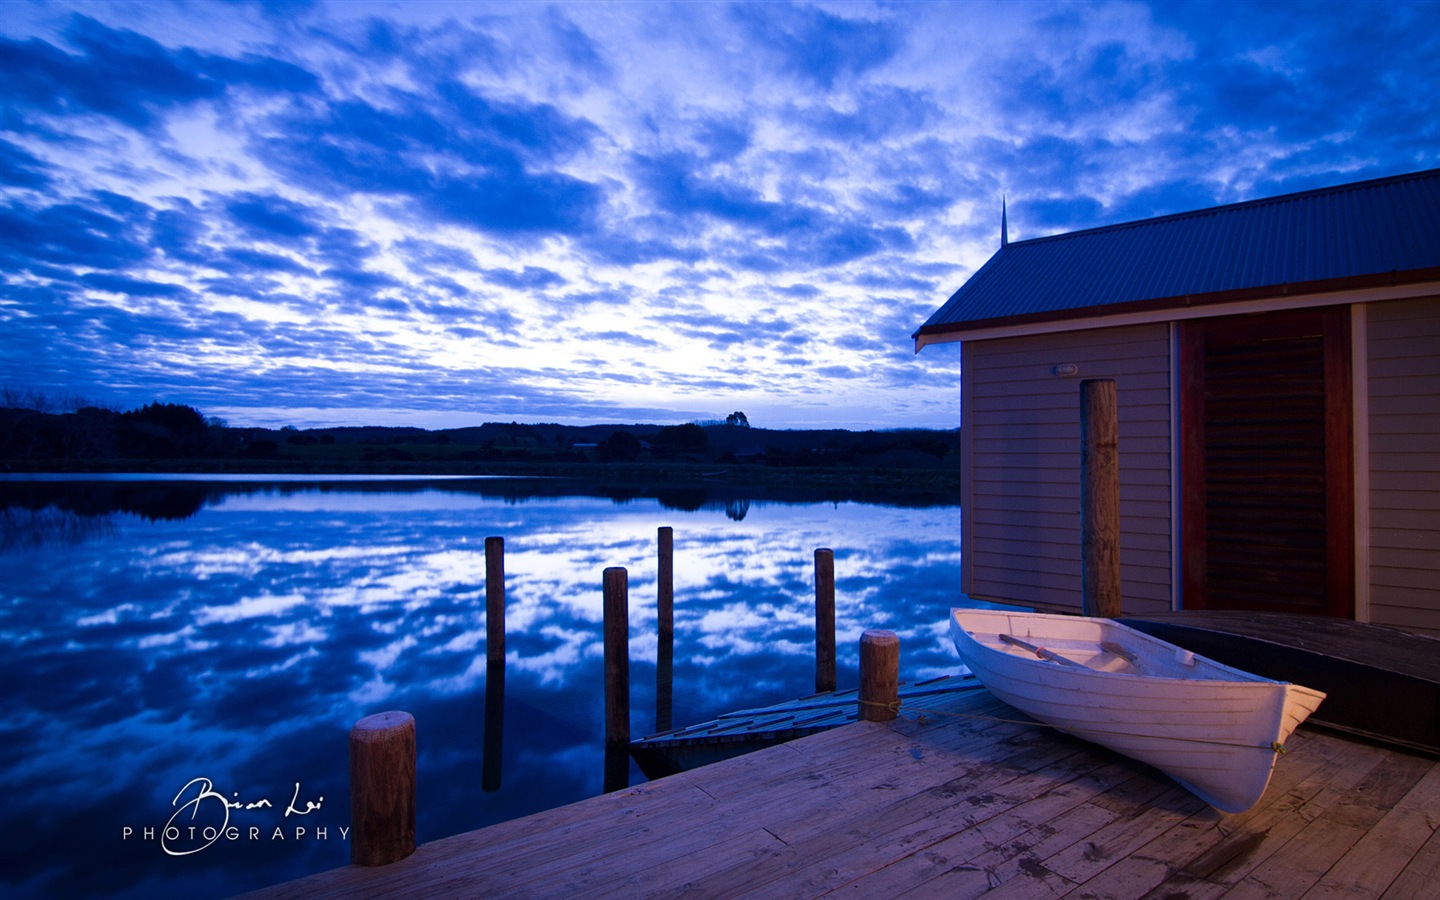 New Zealand North Island beautiful scenery, Windows 8 theme wallpapers #1 - 1440x900